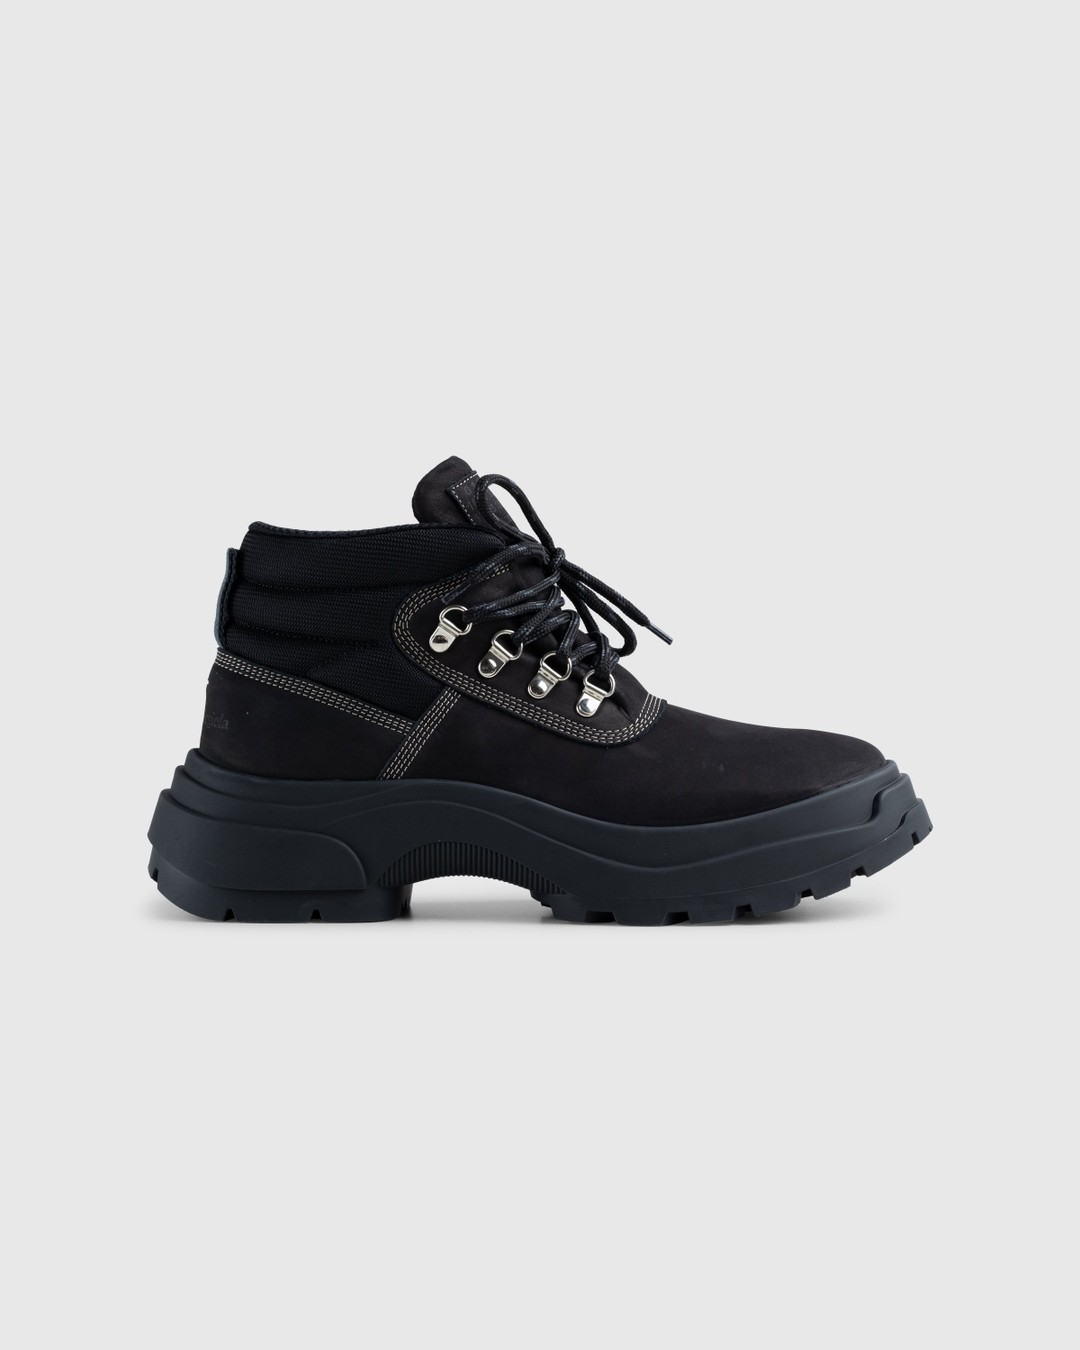 Maison Margiela – Alex Hiking Boot Black/Black - Sneakers - Black - Image 1